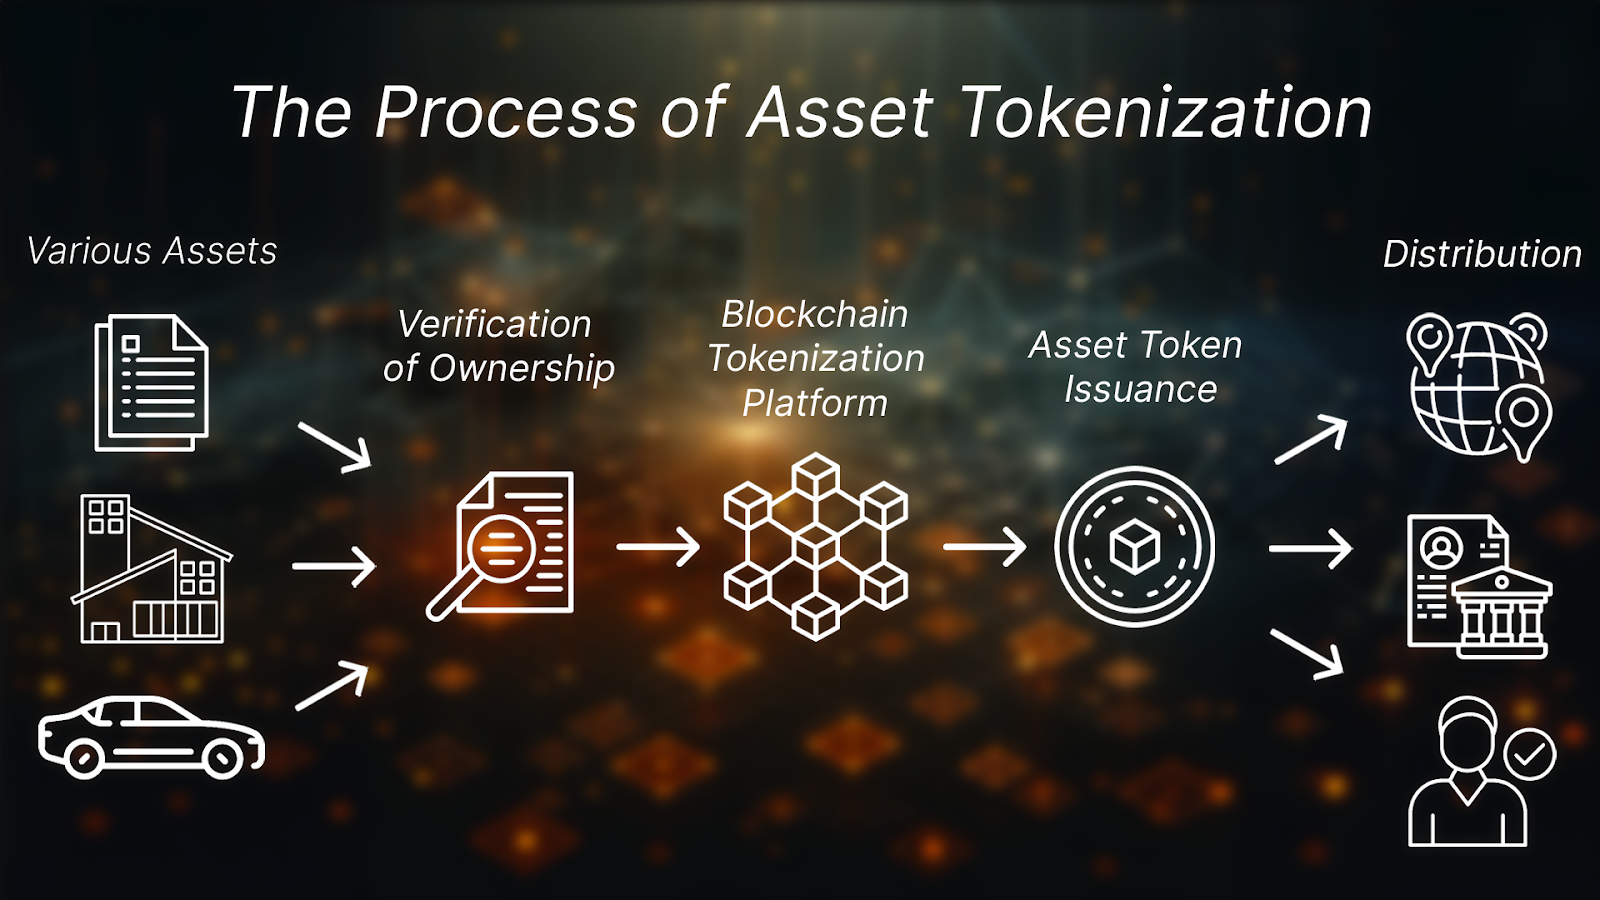 The Process of Asset Tokenization